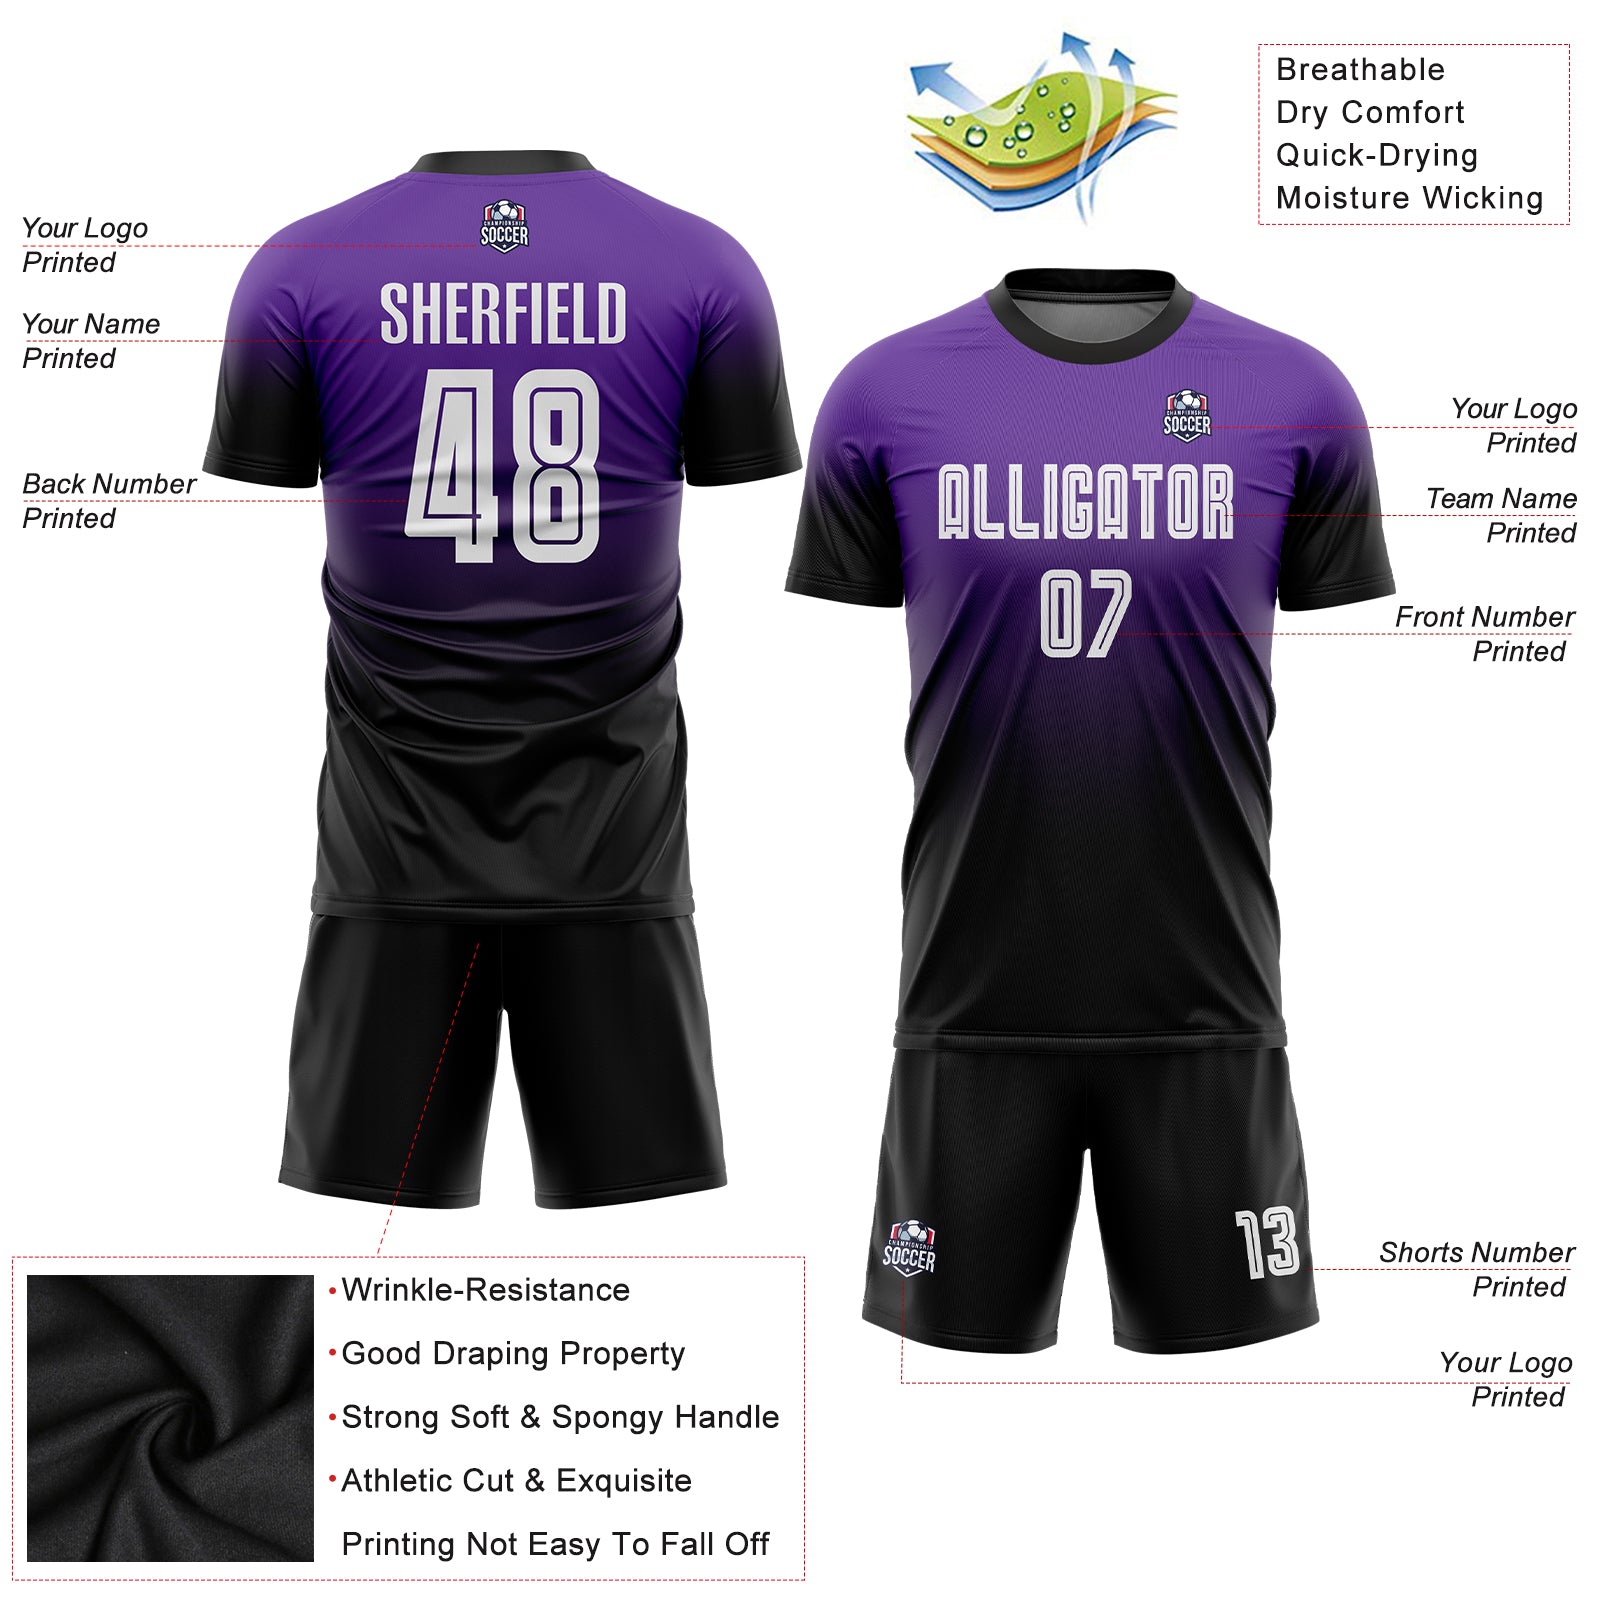 Football Jersey Design Purple with Black